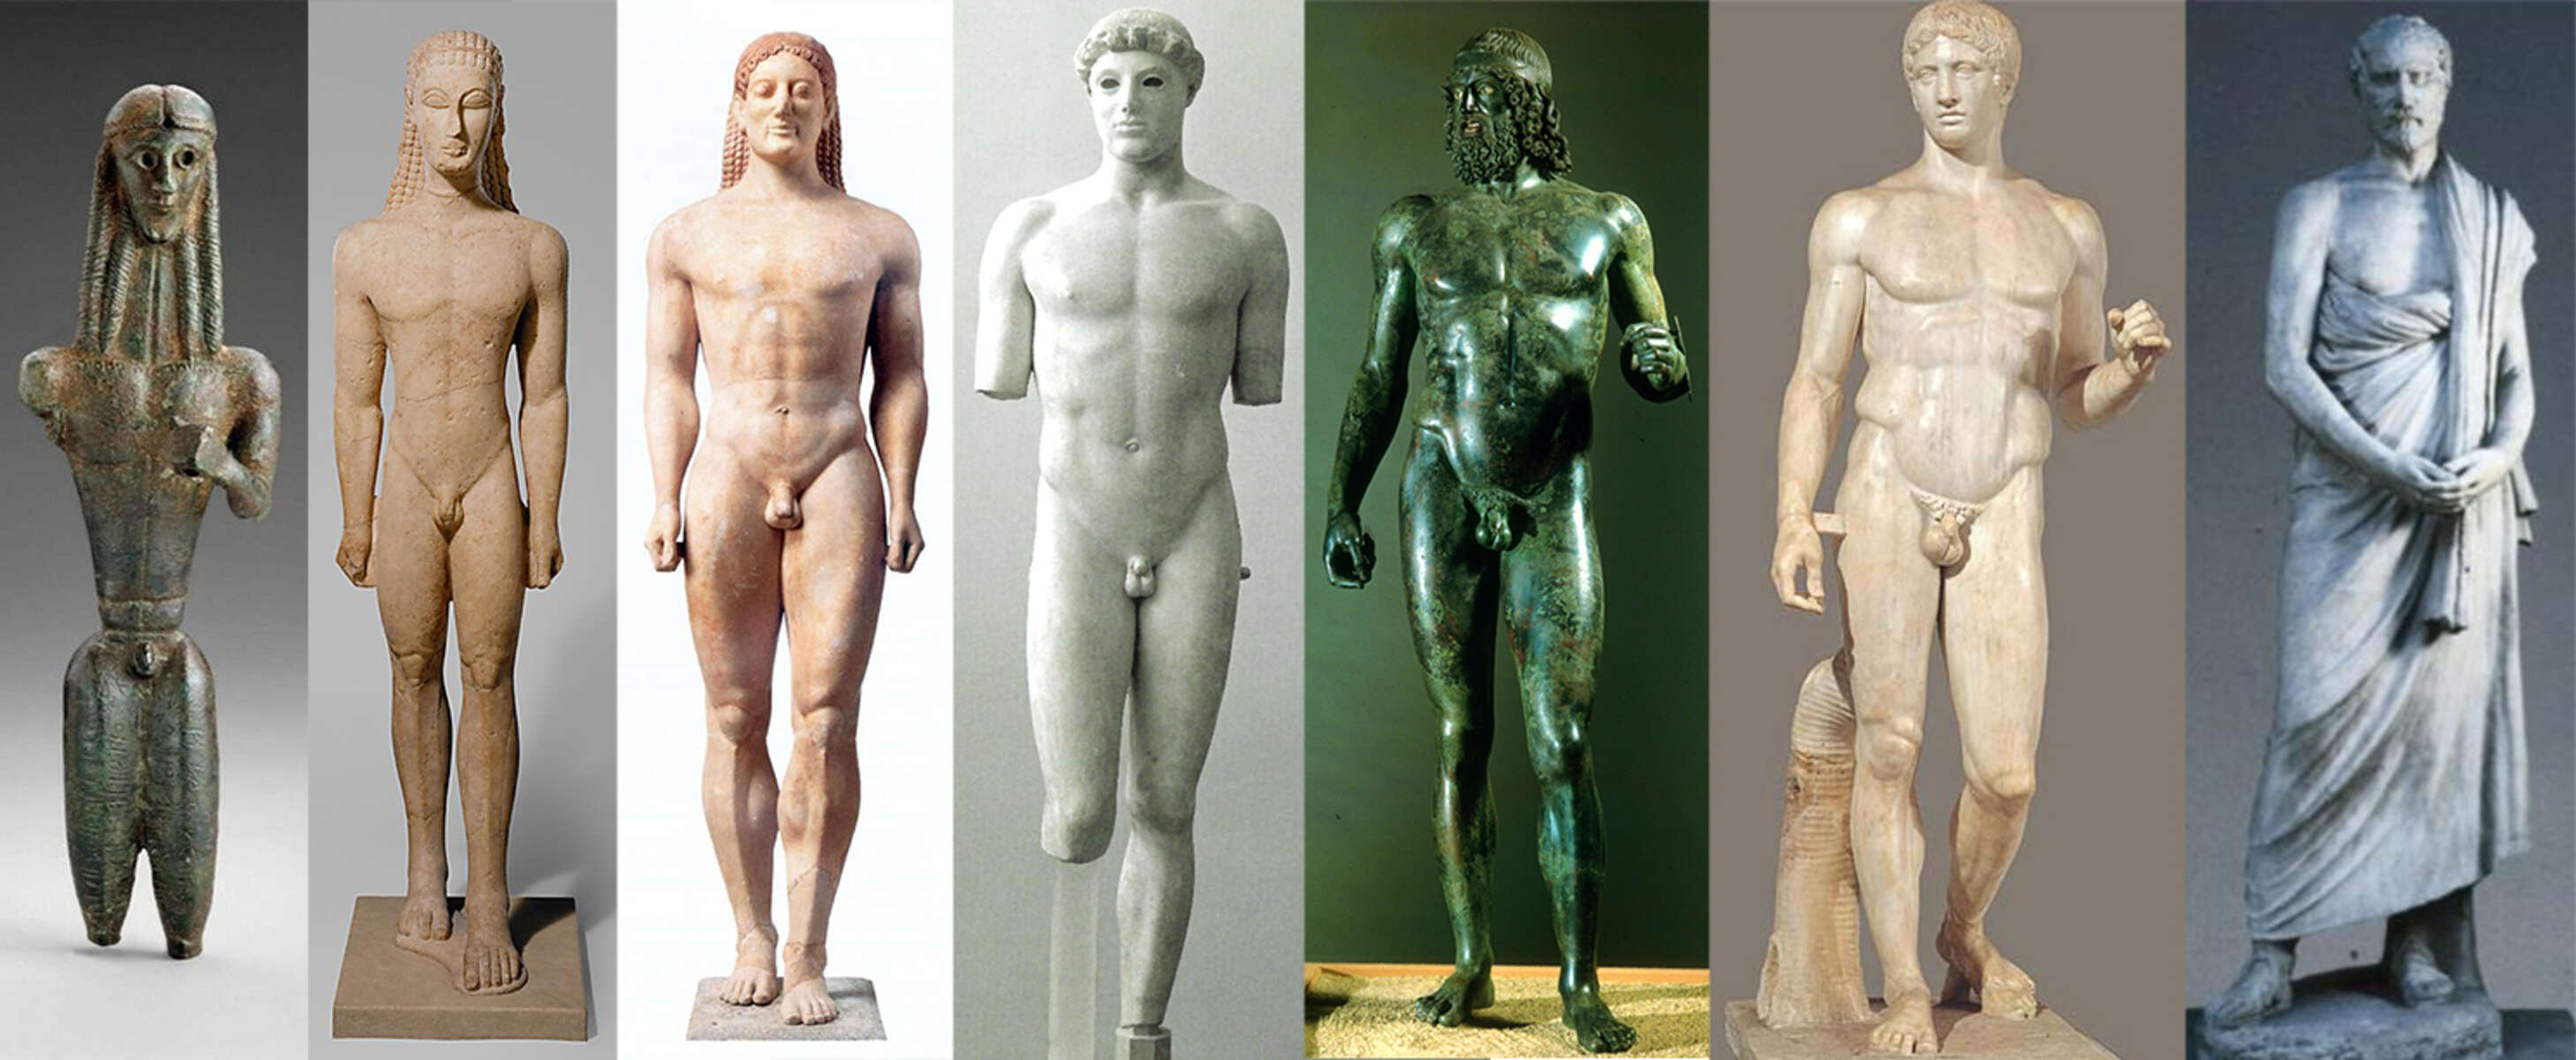 How Did Greek Sculpture Evolve Over Time?